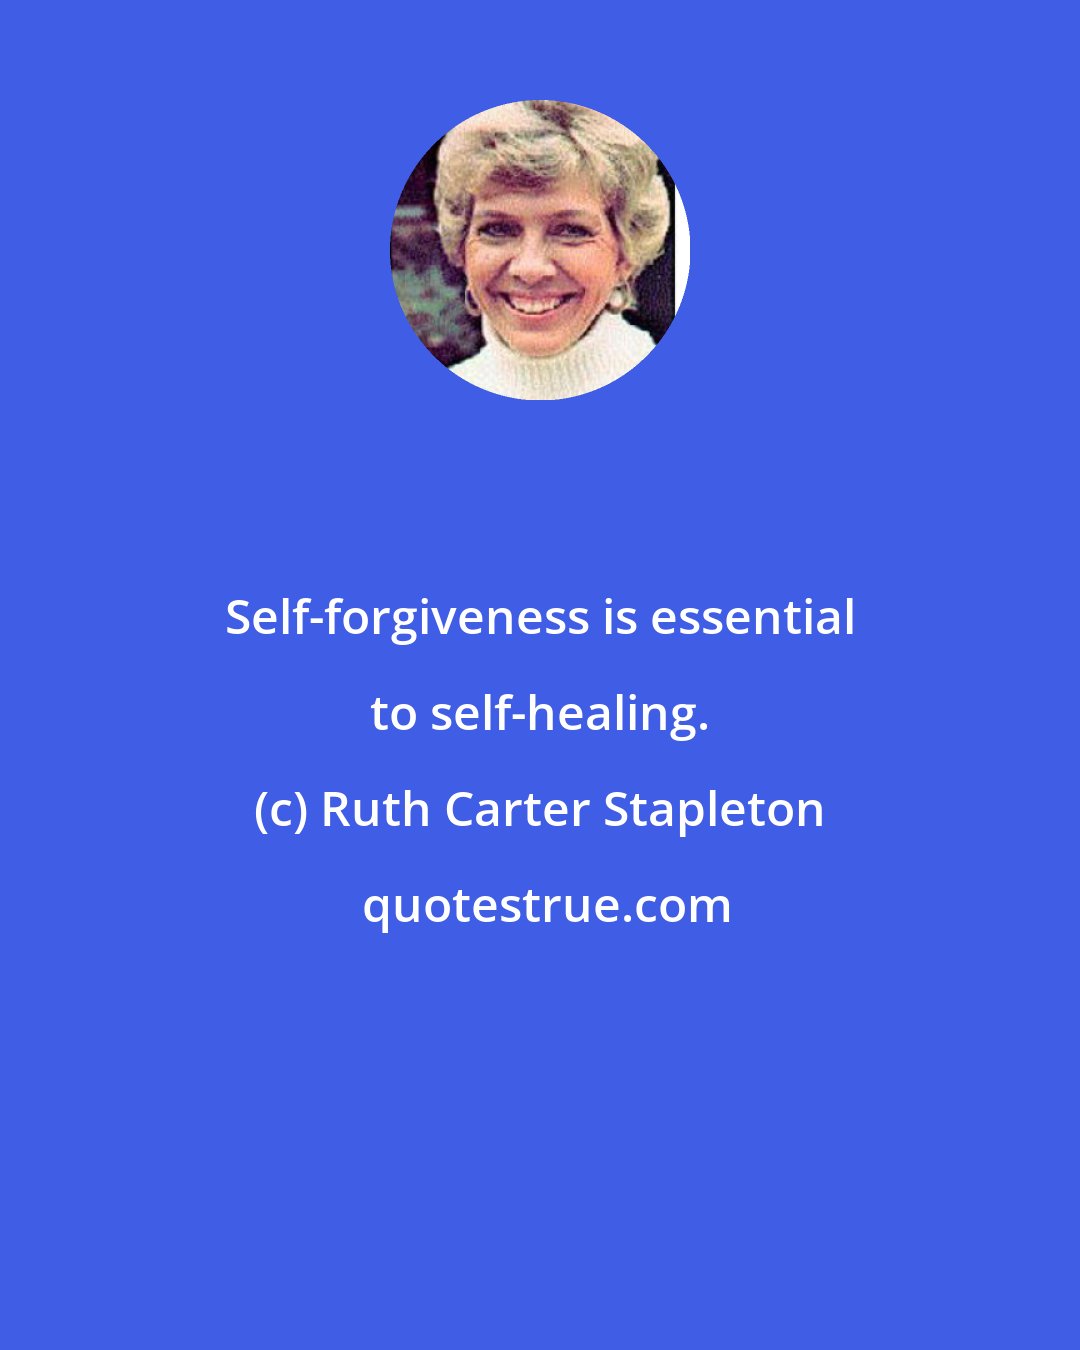 Ruth Carter Stapleton: Self-forgiveness is essential to self-healing.